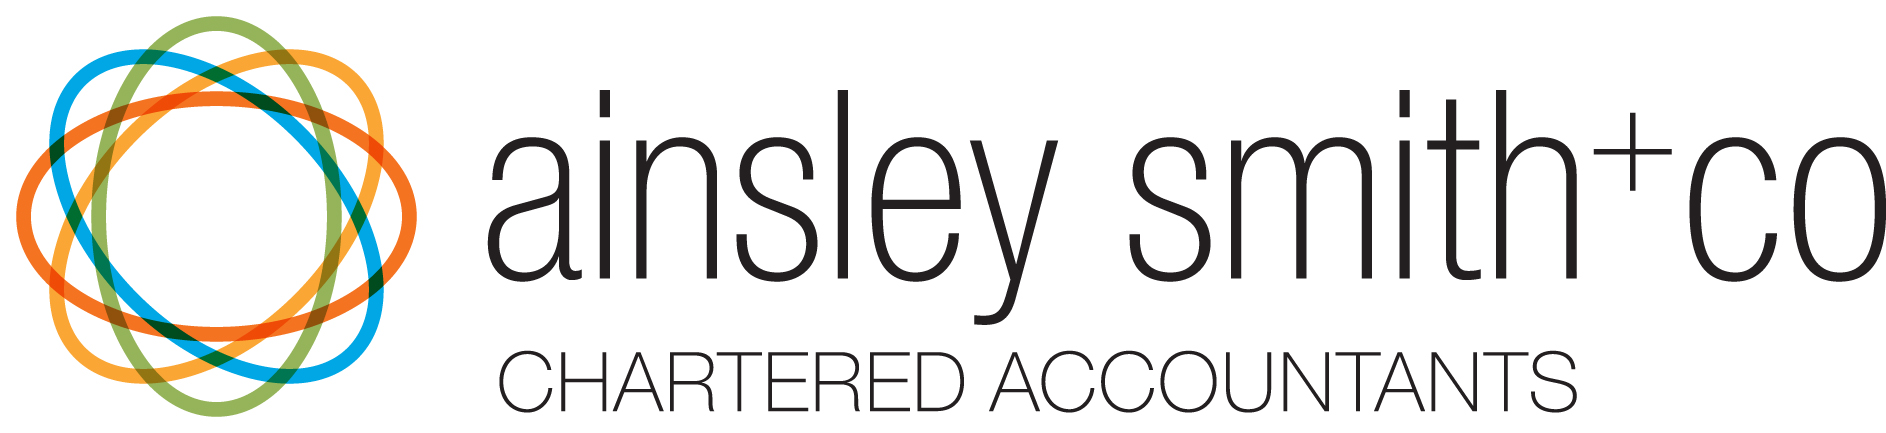 Ainsley Smith & Co, Accountants, logo